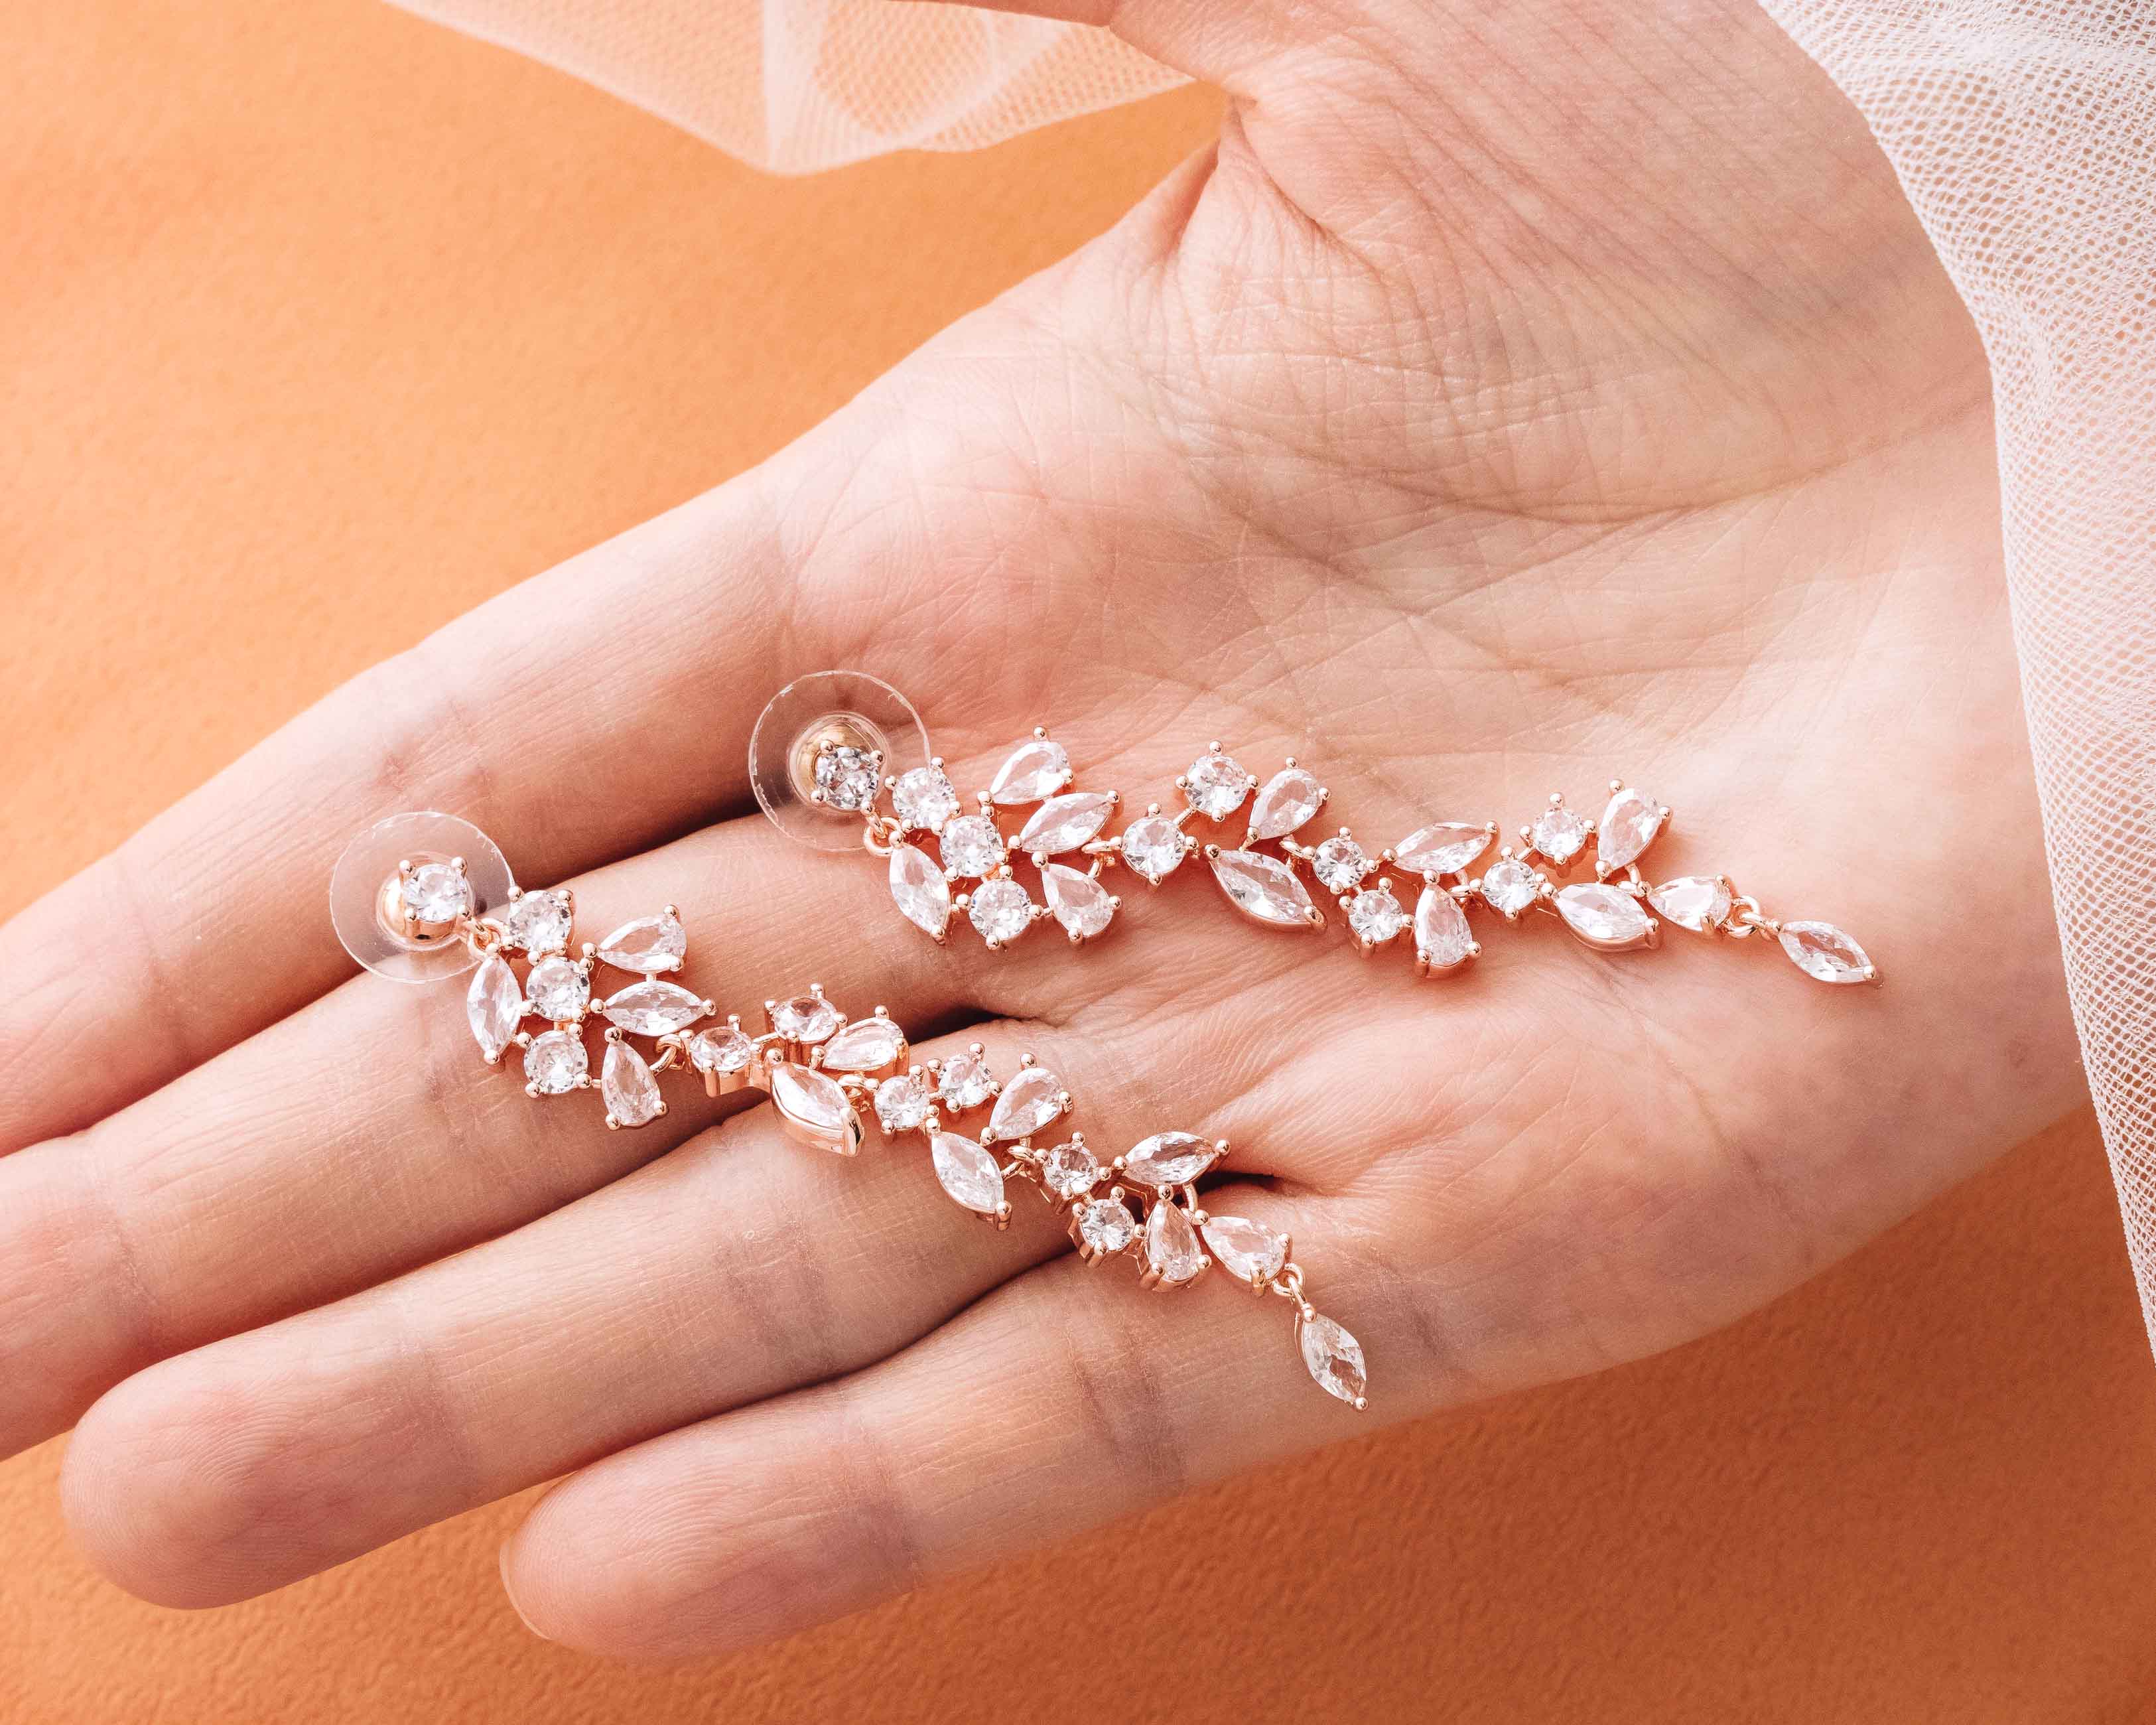 Rosegold Crystal Dangle Earrings - The perfect wedding earrings.